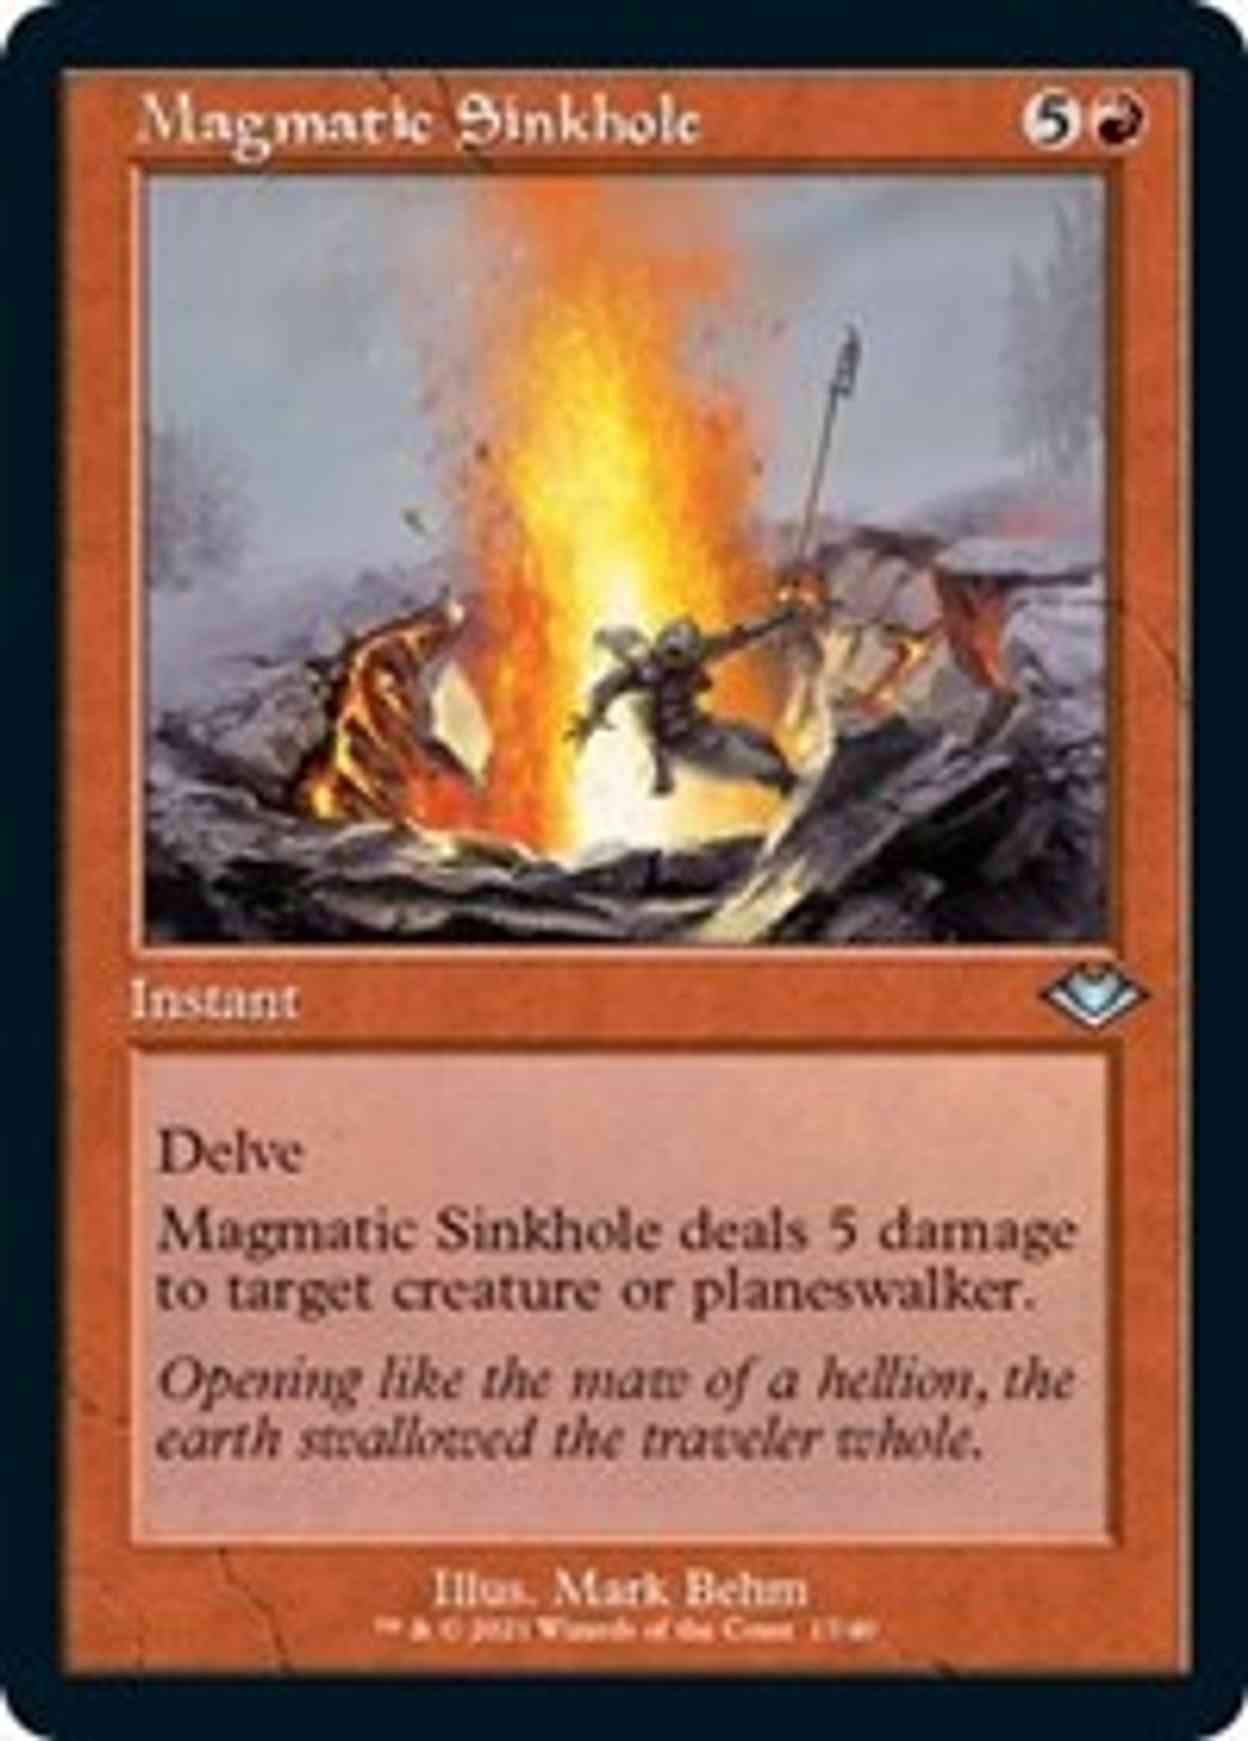 Magmatic Sinkhole (Retro Frame) magic card front